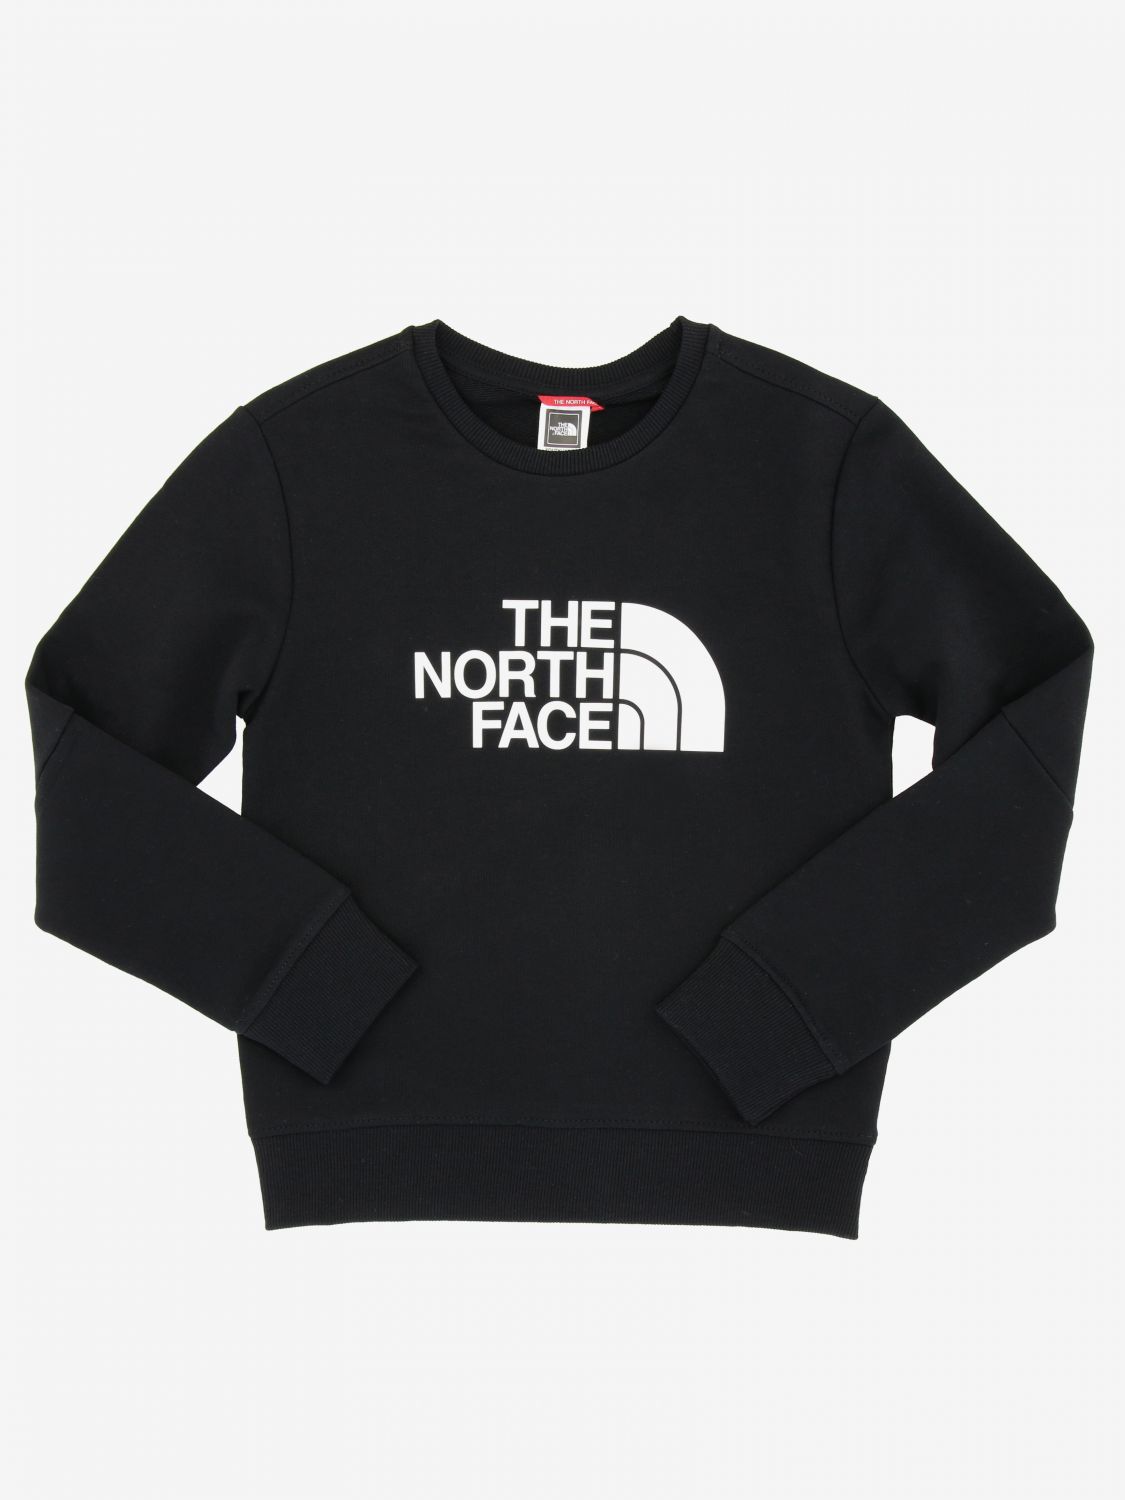 north face hoodless sweatshirt